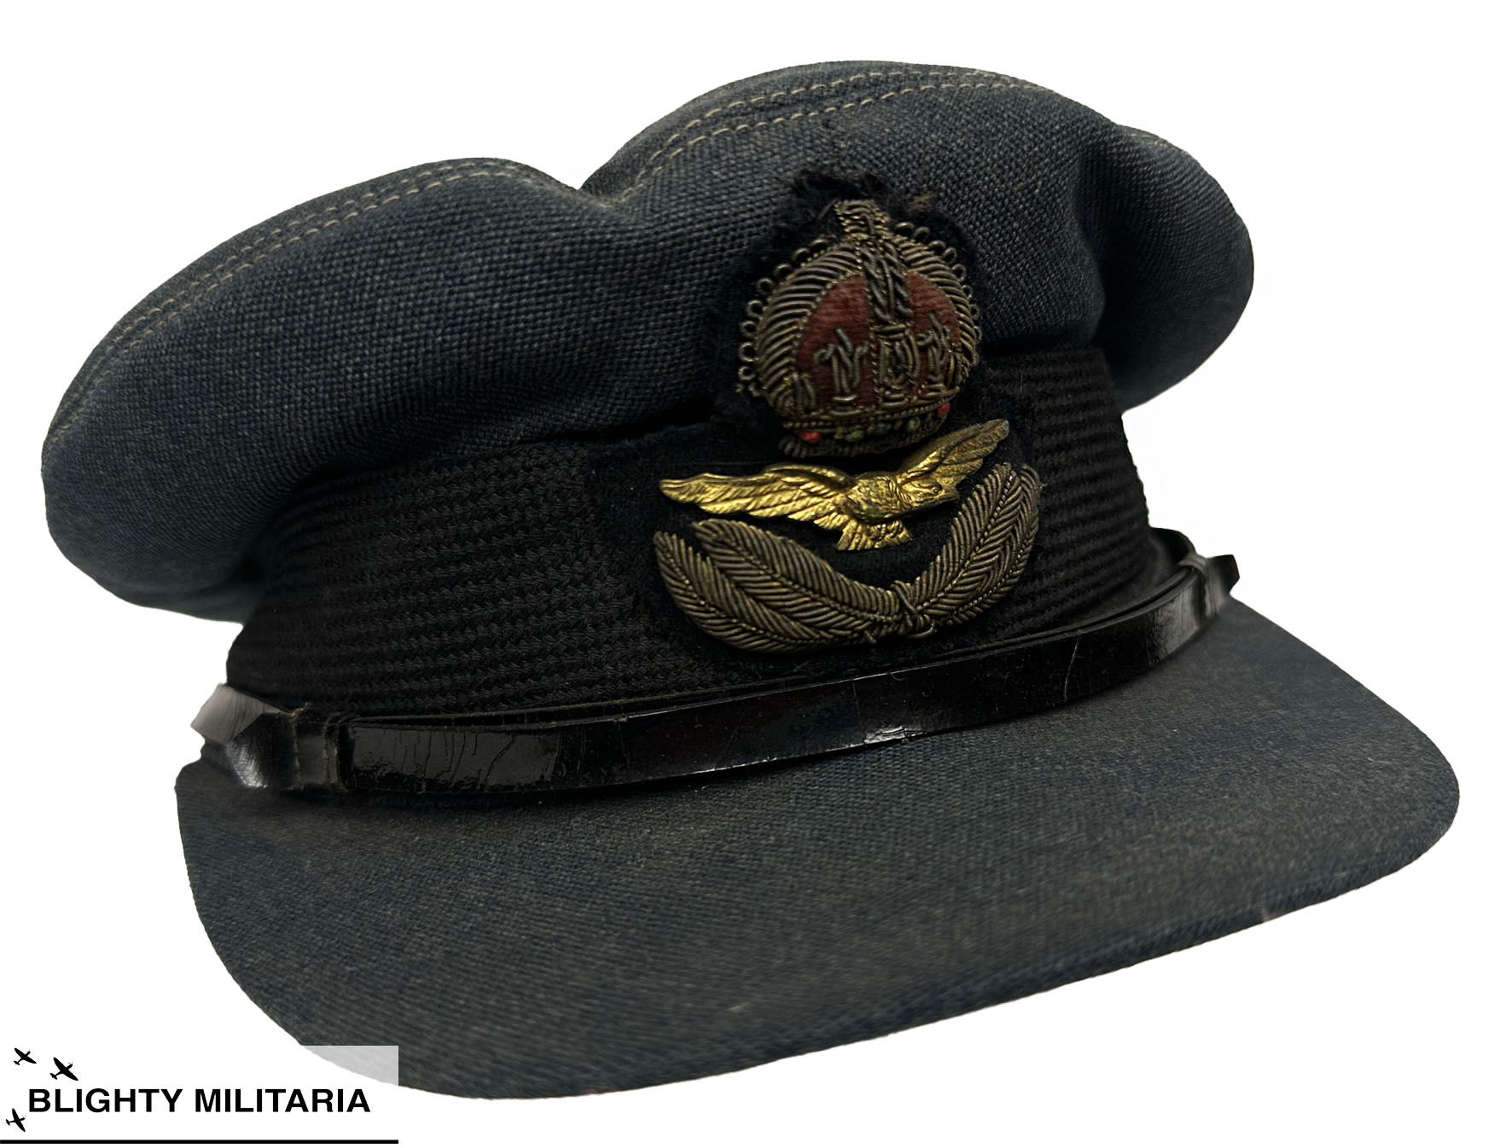 Original WW2 RAF Officer's Peaked Cap